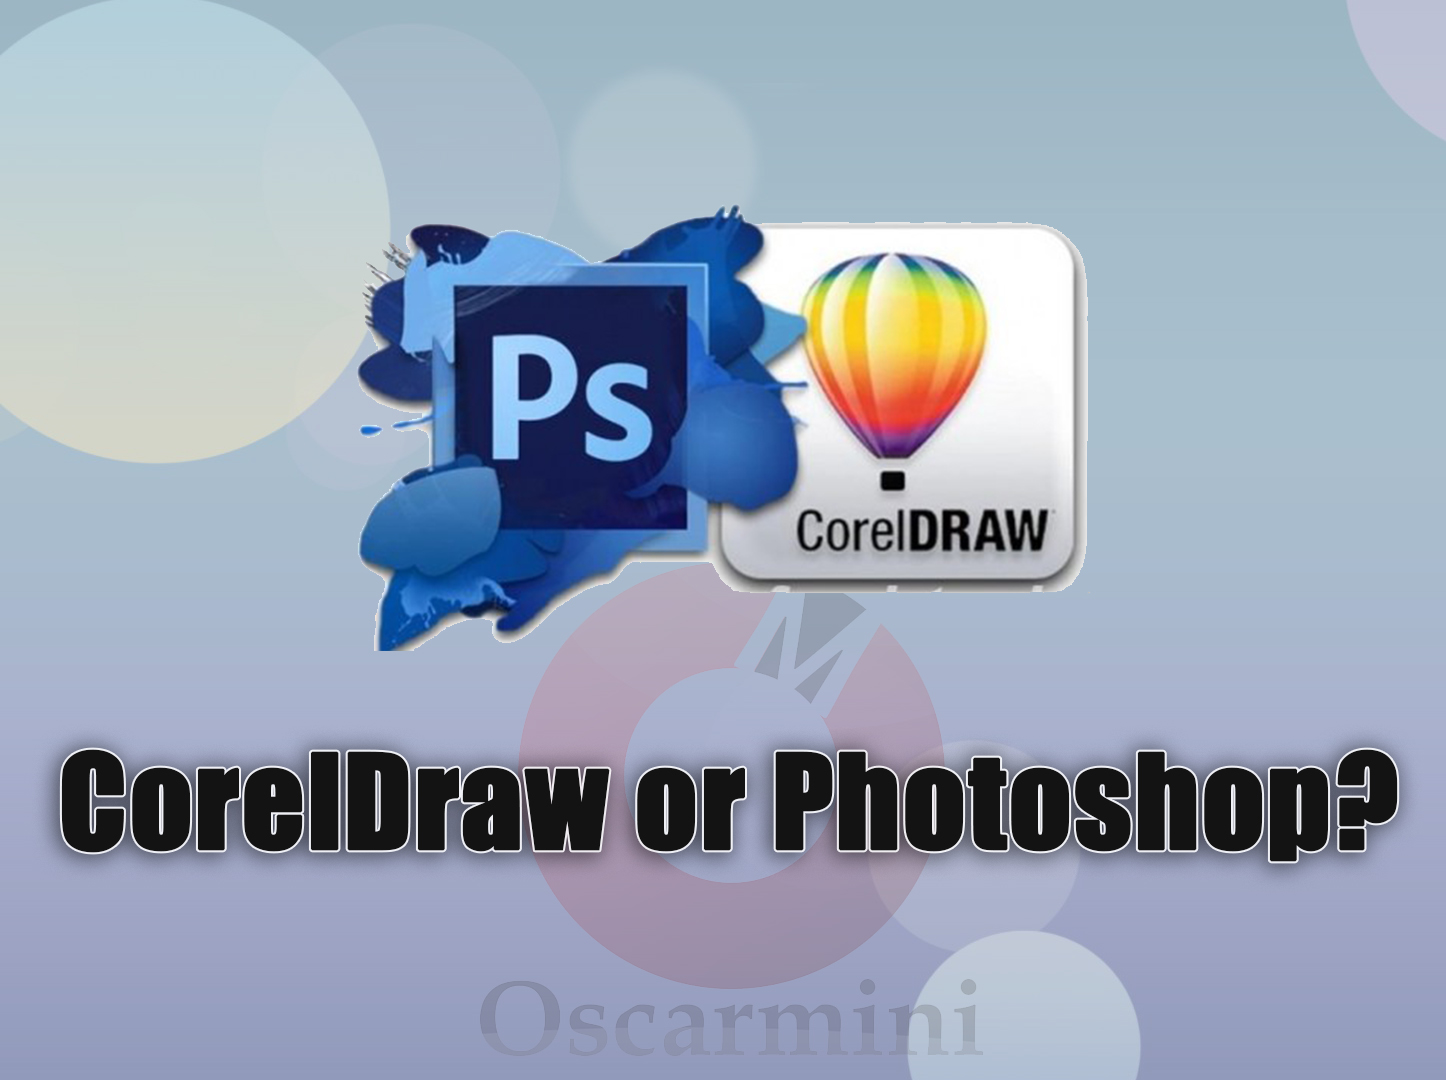 Corel draw vs photoshop free download illustrator cs6 free trial download